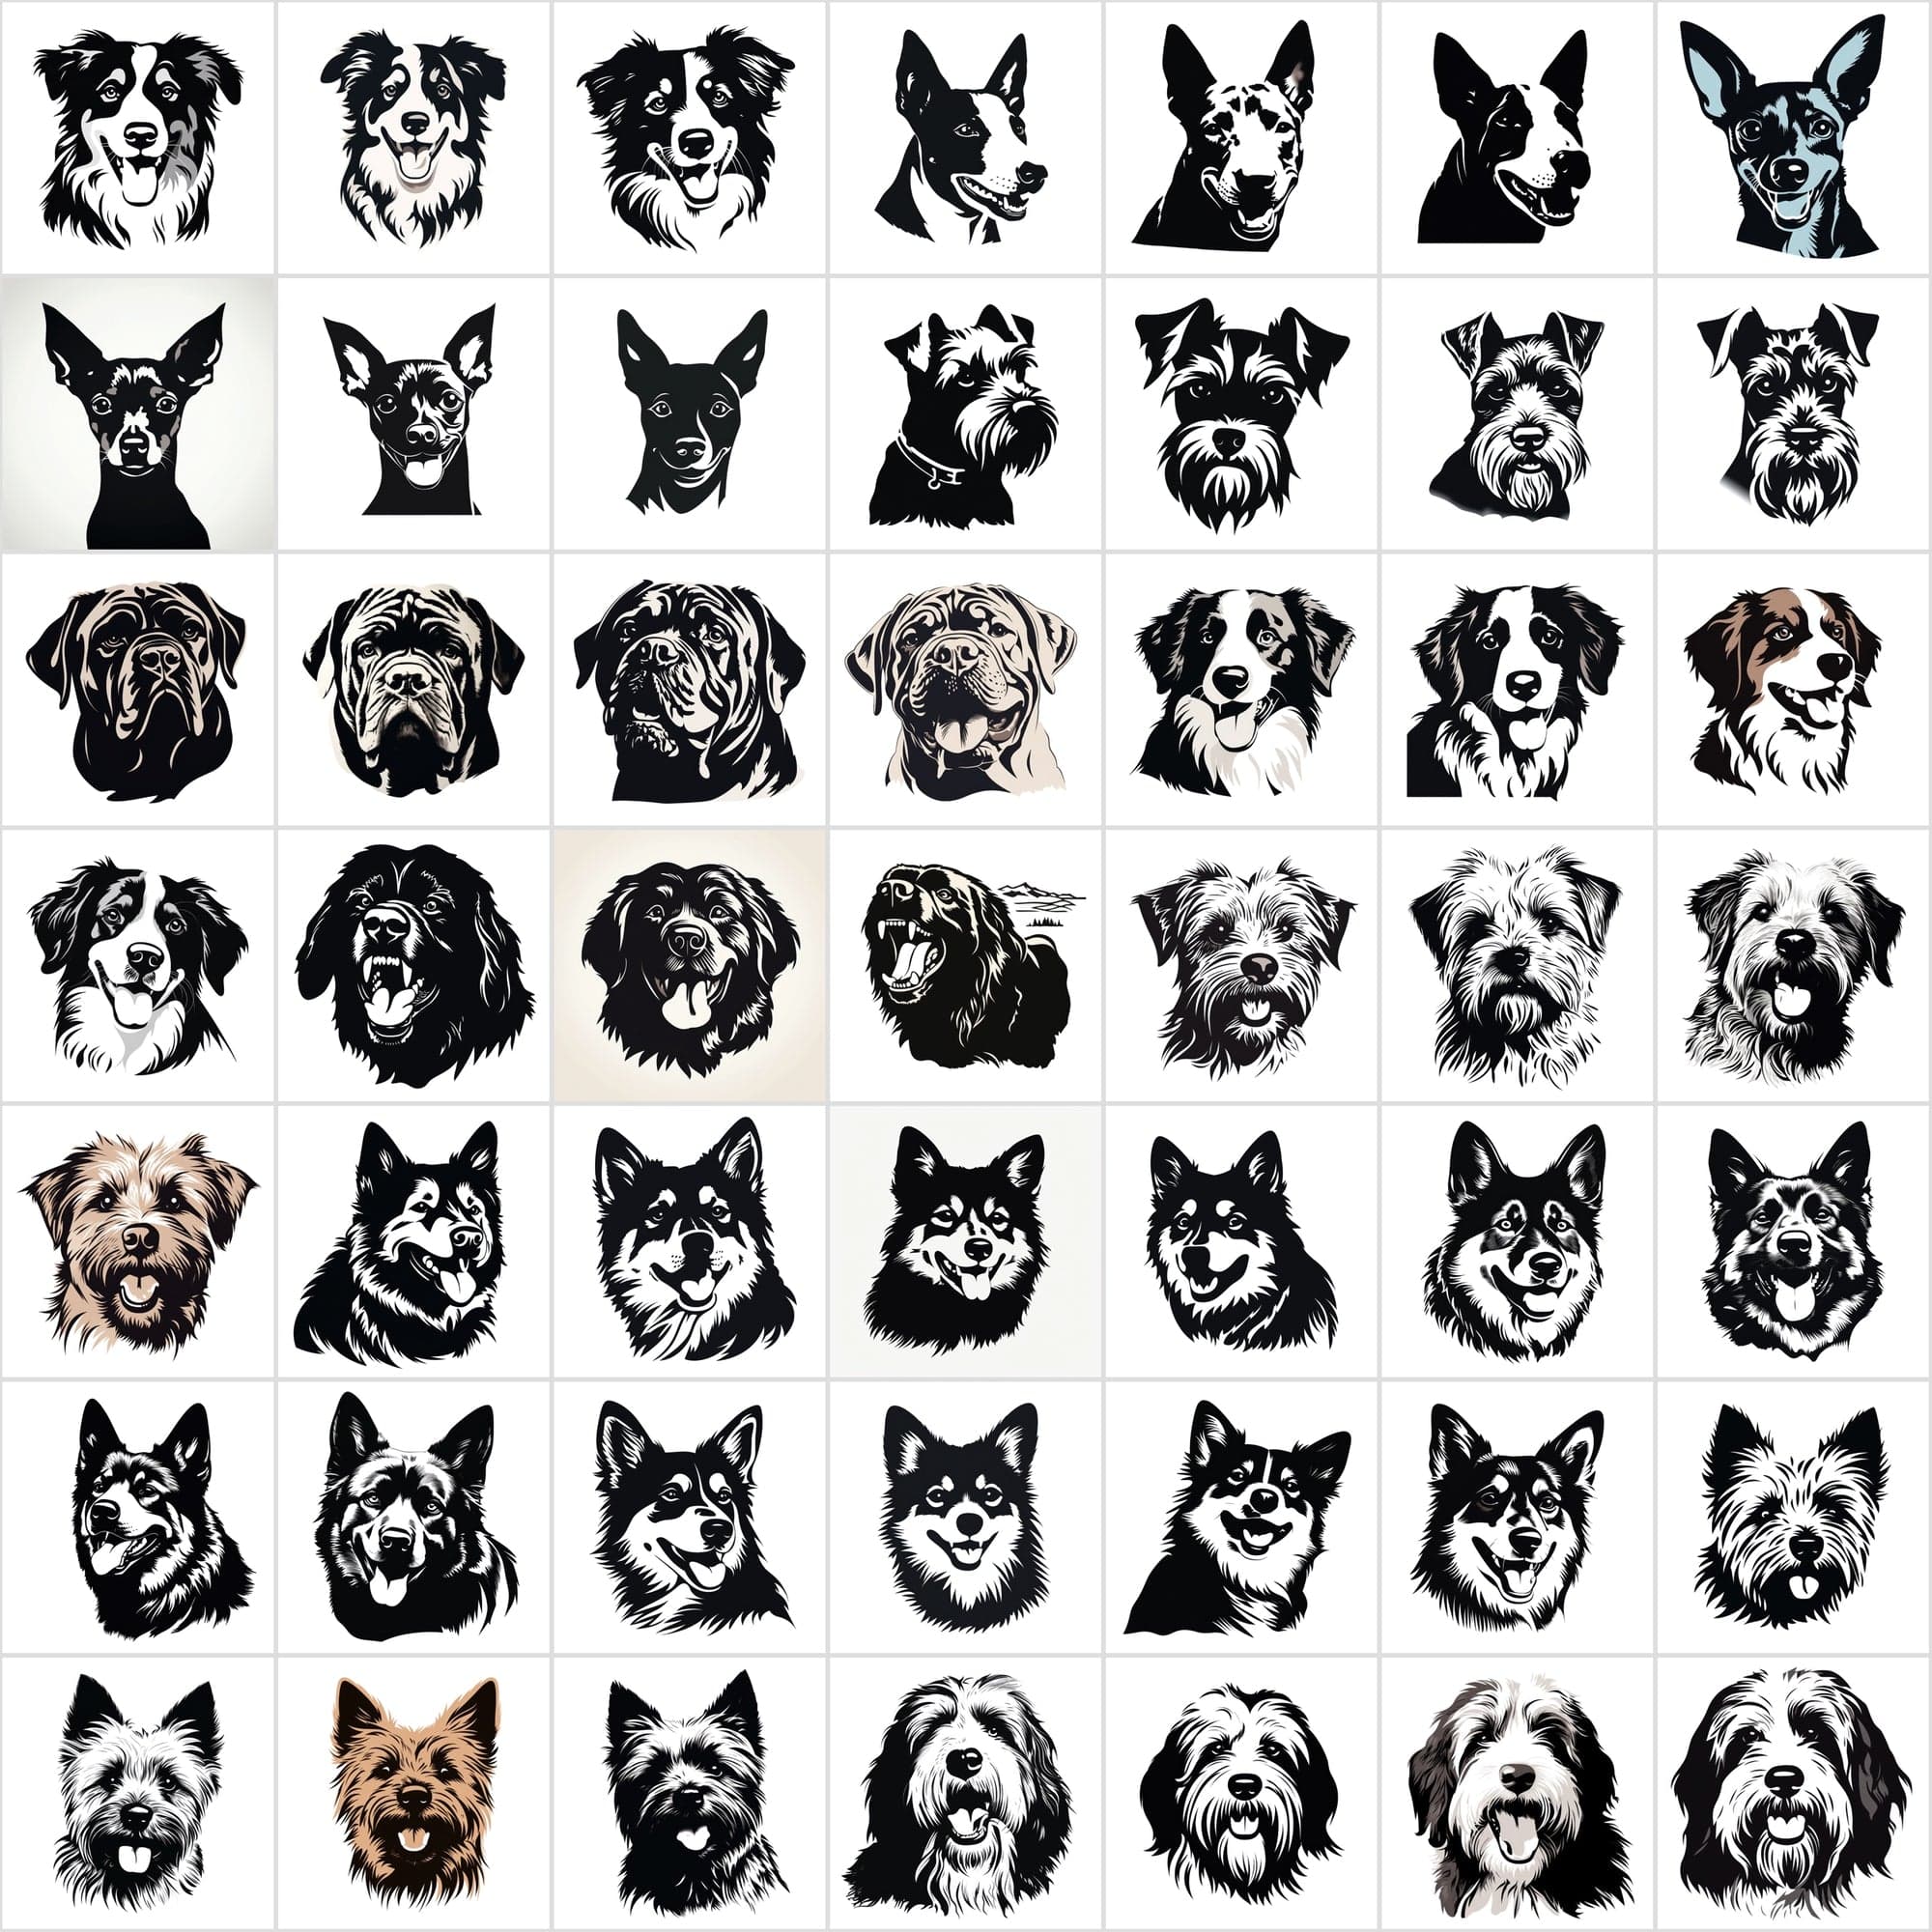 730 Premium Dog PNG Collection for Print-On-Demand, High-Quality Black & White Dog Images Digital Download Sumobundle